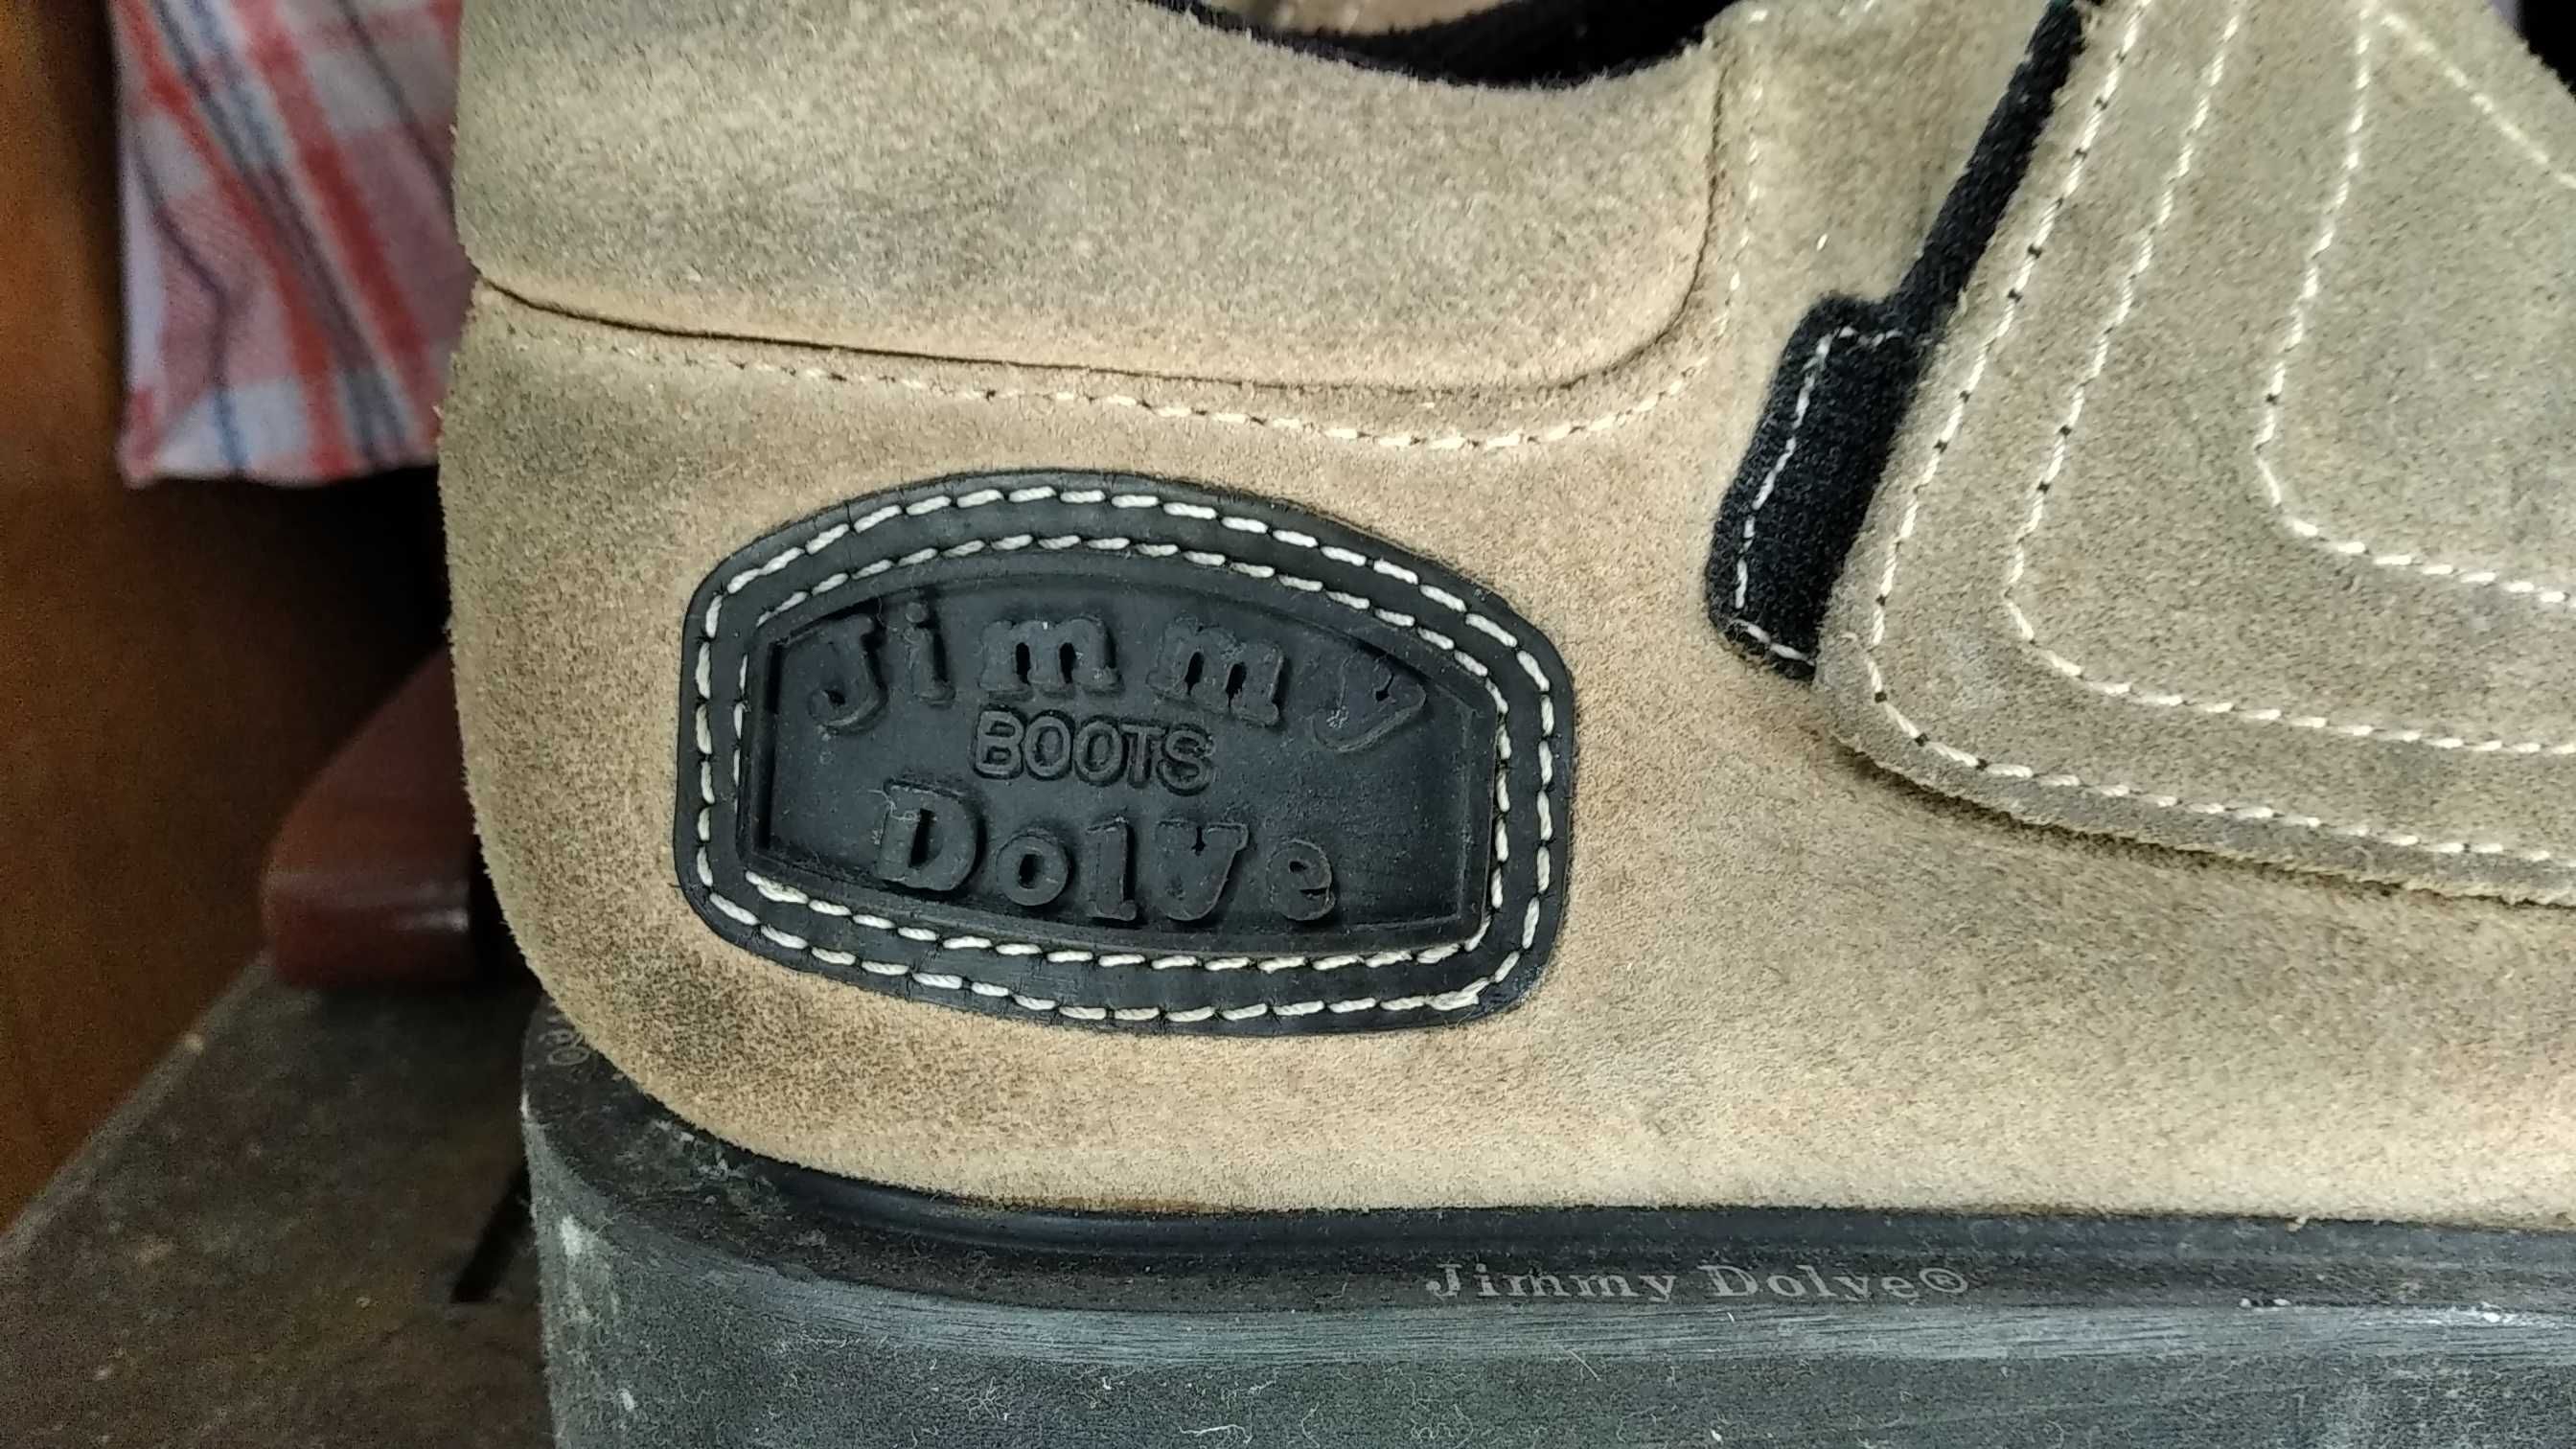 Sapatos Jimmy Dolye Boots